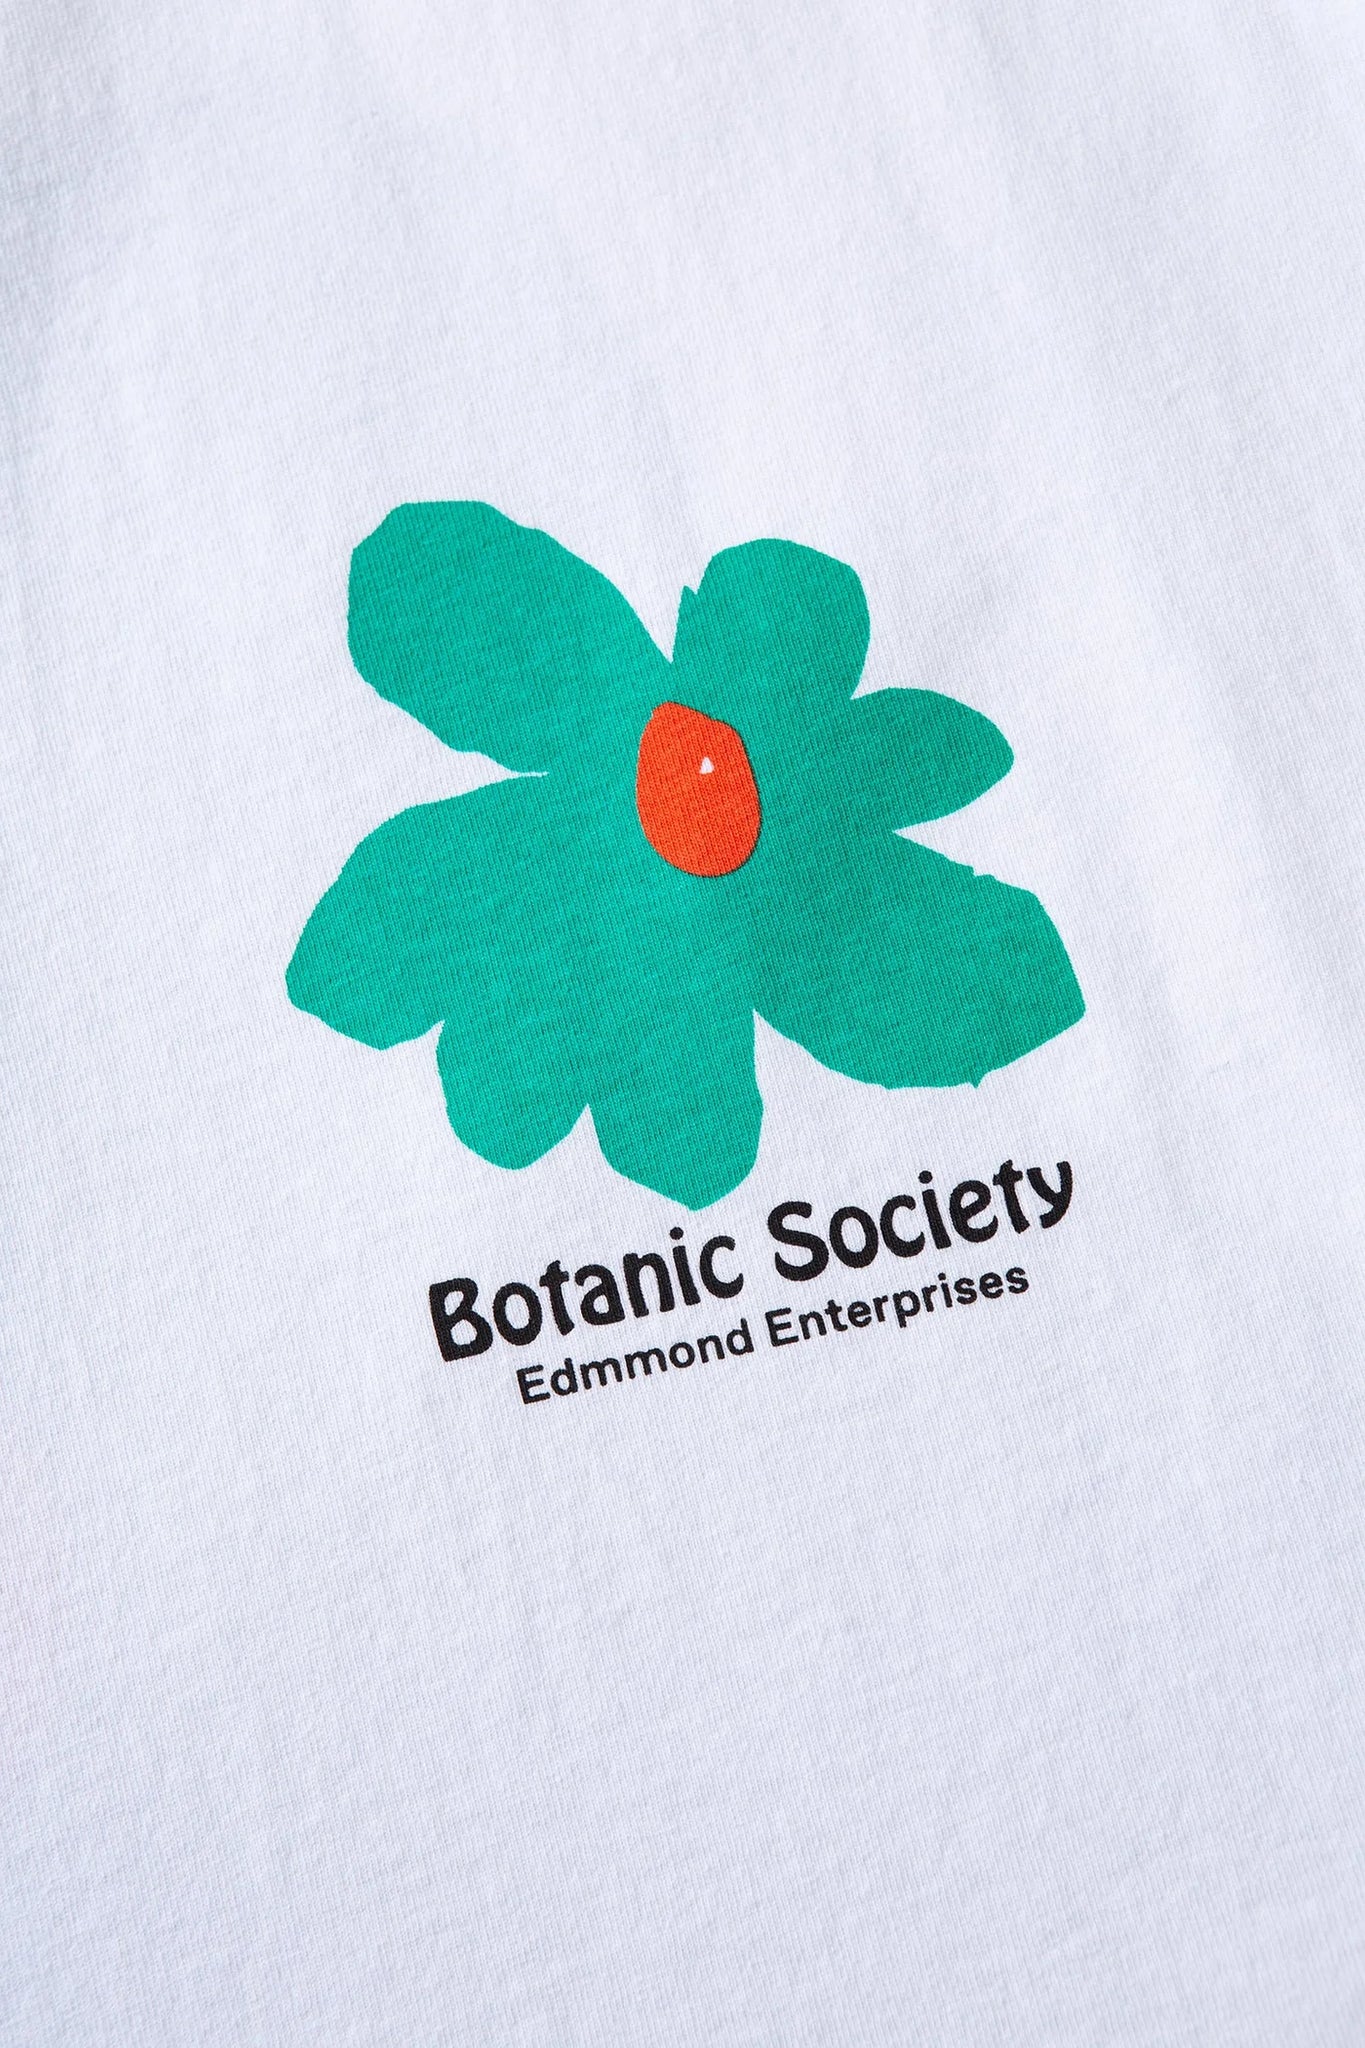 Weißes T-Shirt der Edmmond Studios Botanic Society